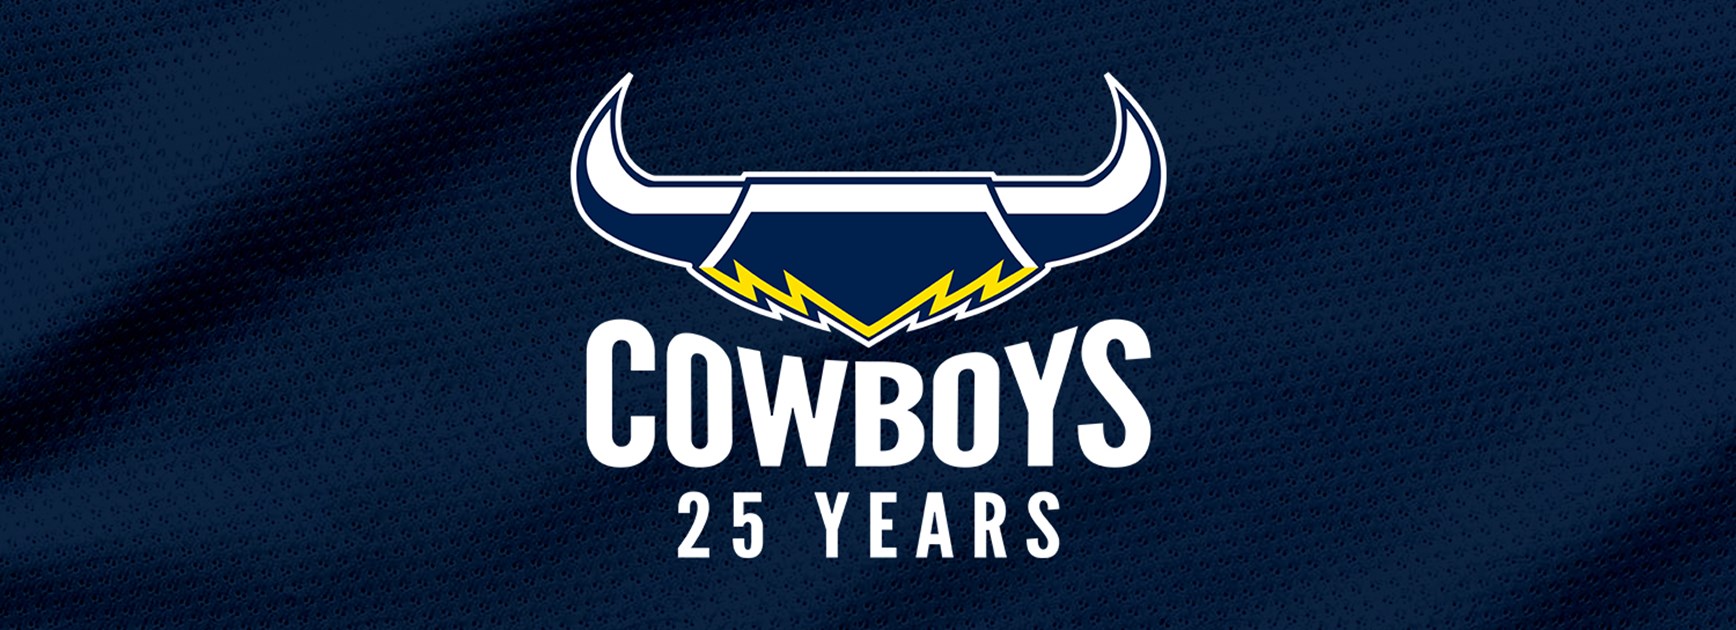 Cowboys reveal 25th anniversary logo